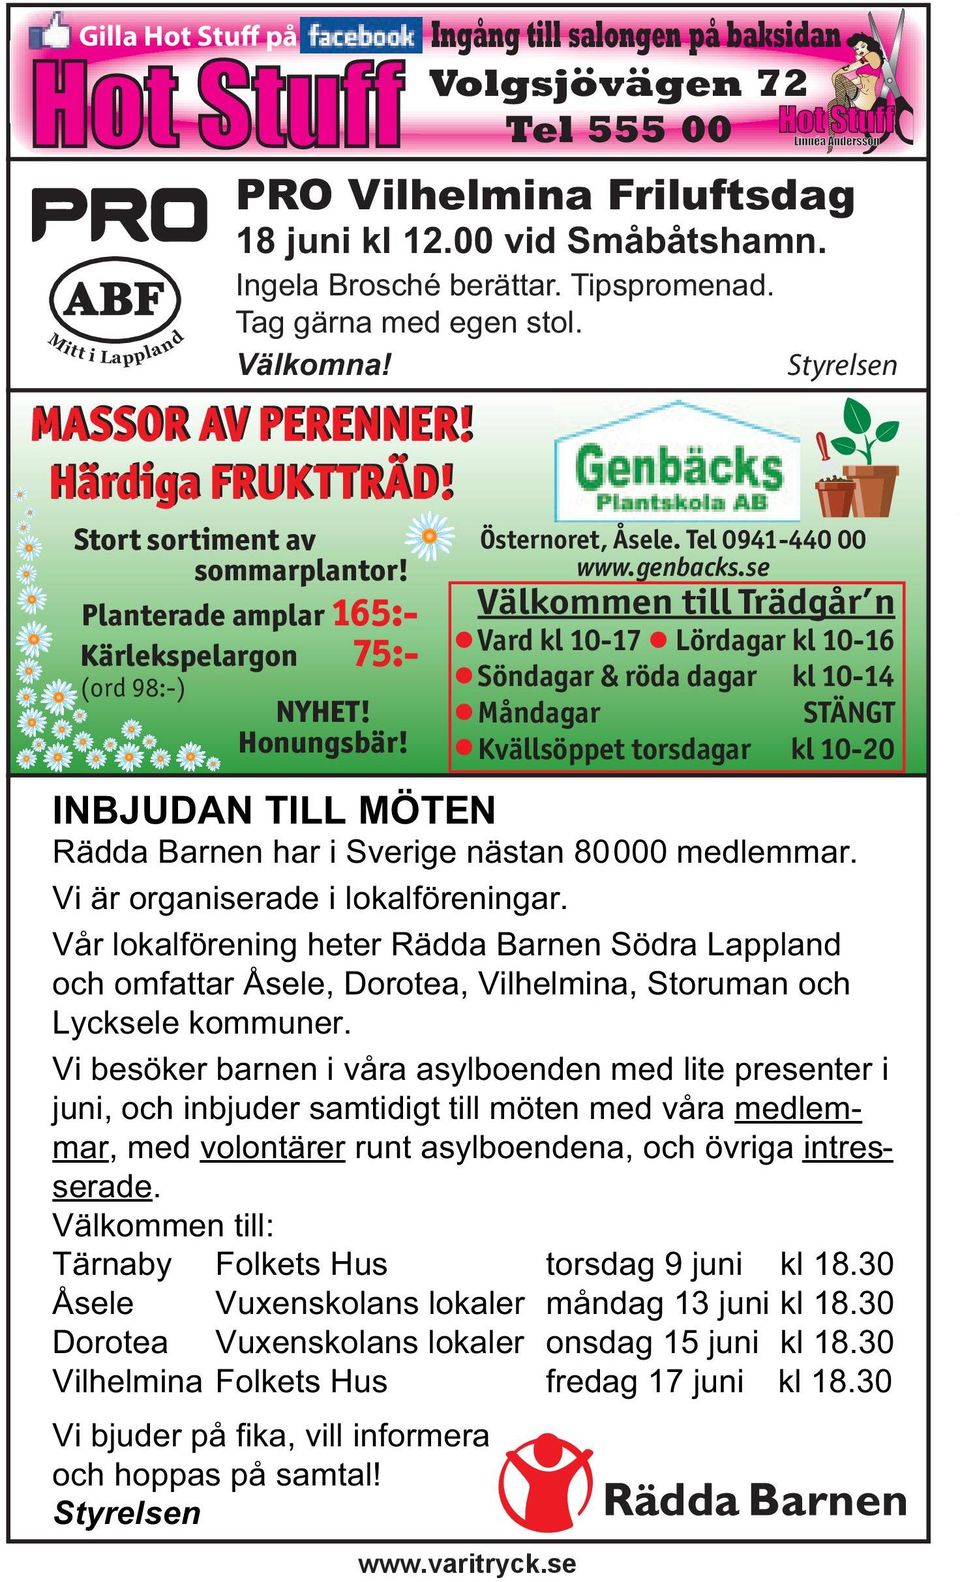 Styrelsen Östernoret, Åsele. Tel 0941-440 00 www.genbacks.